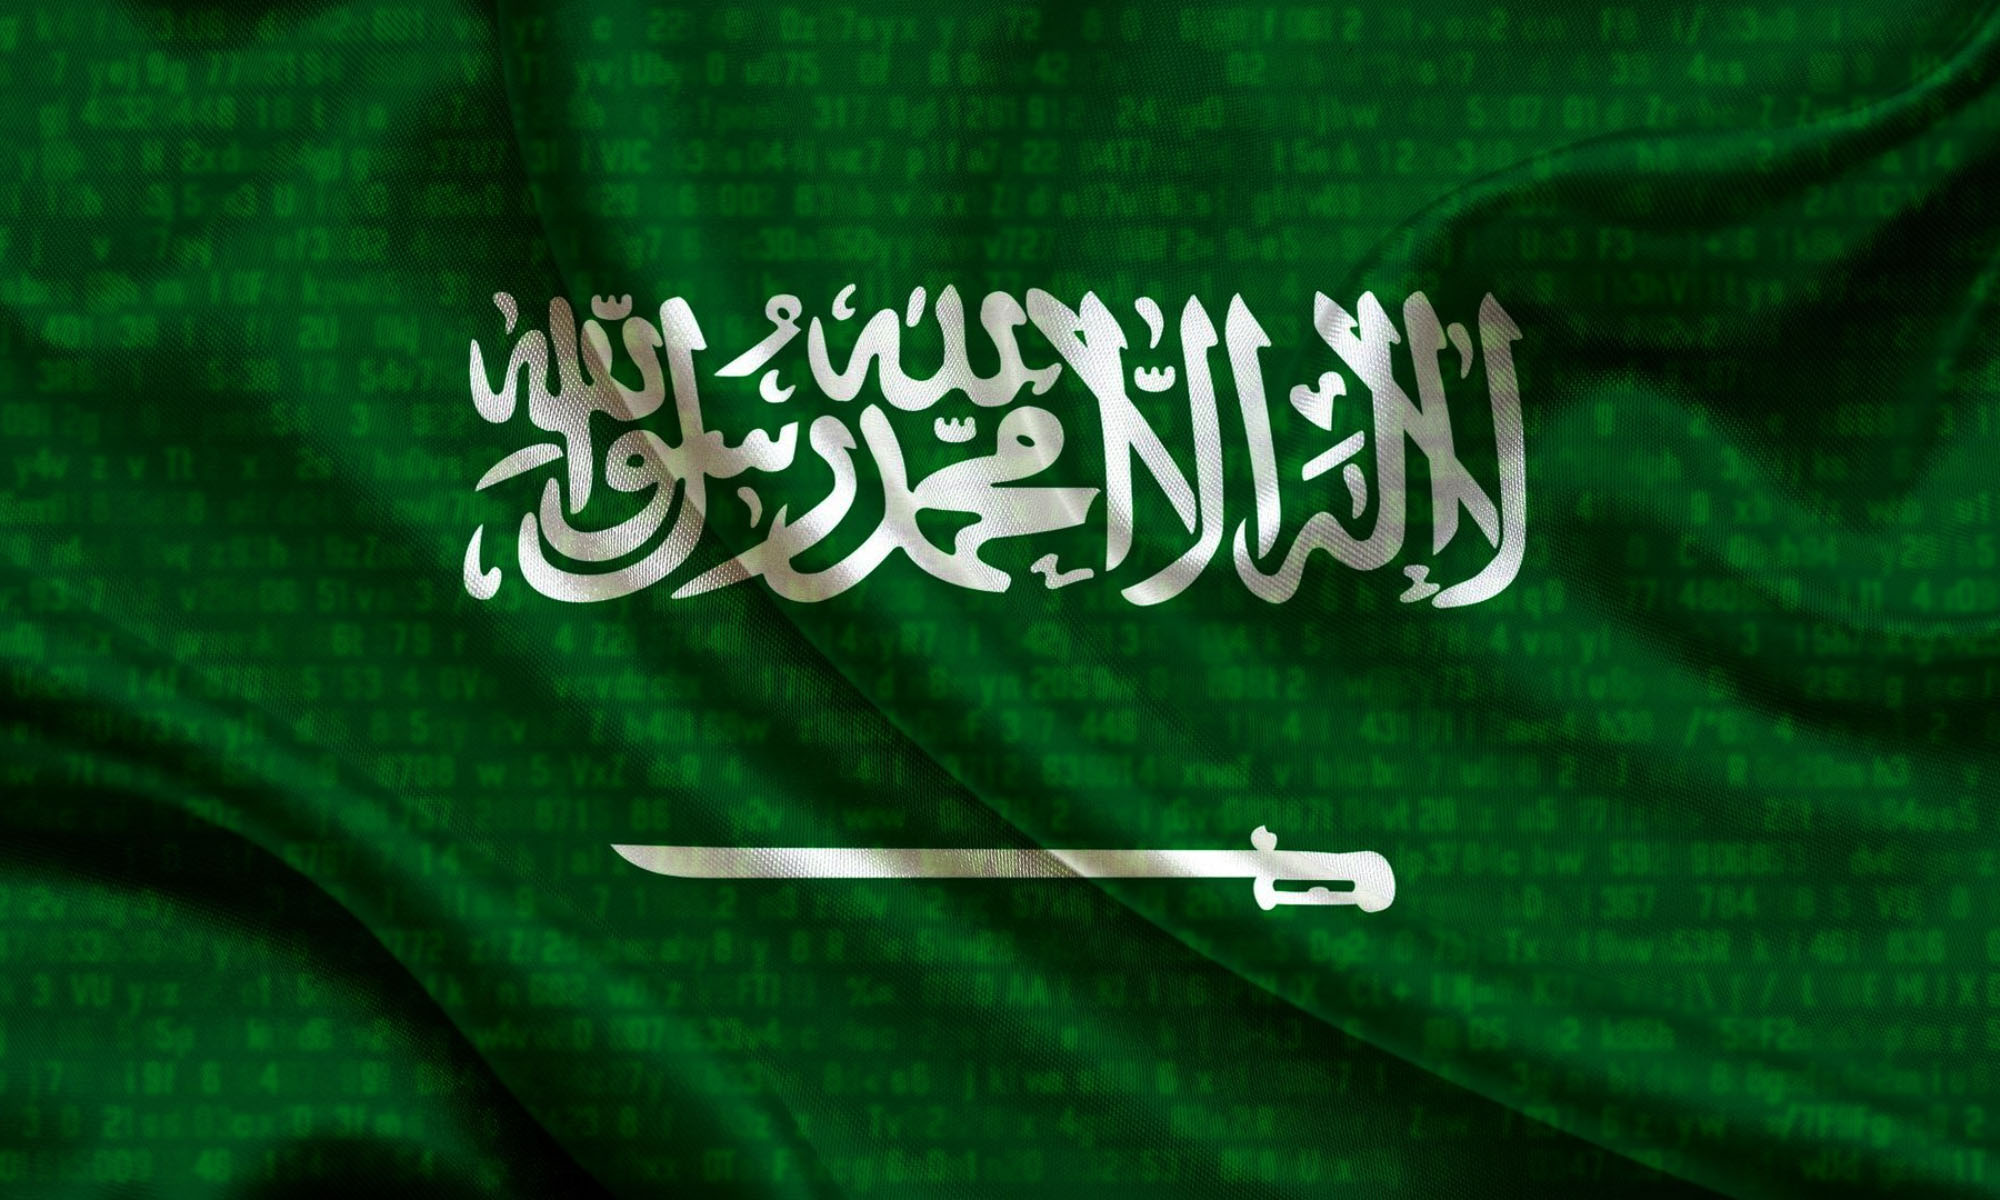 widespread phishing scam discovered in kingdom of saudi arabia